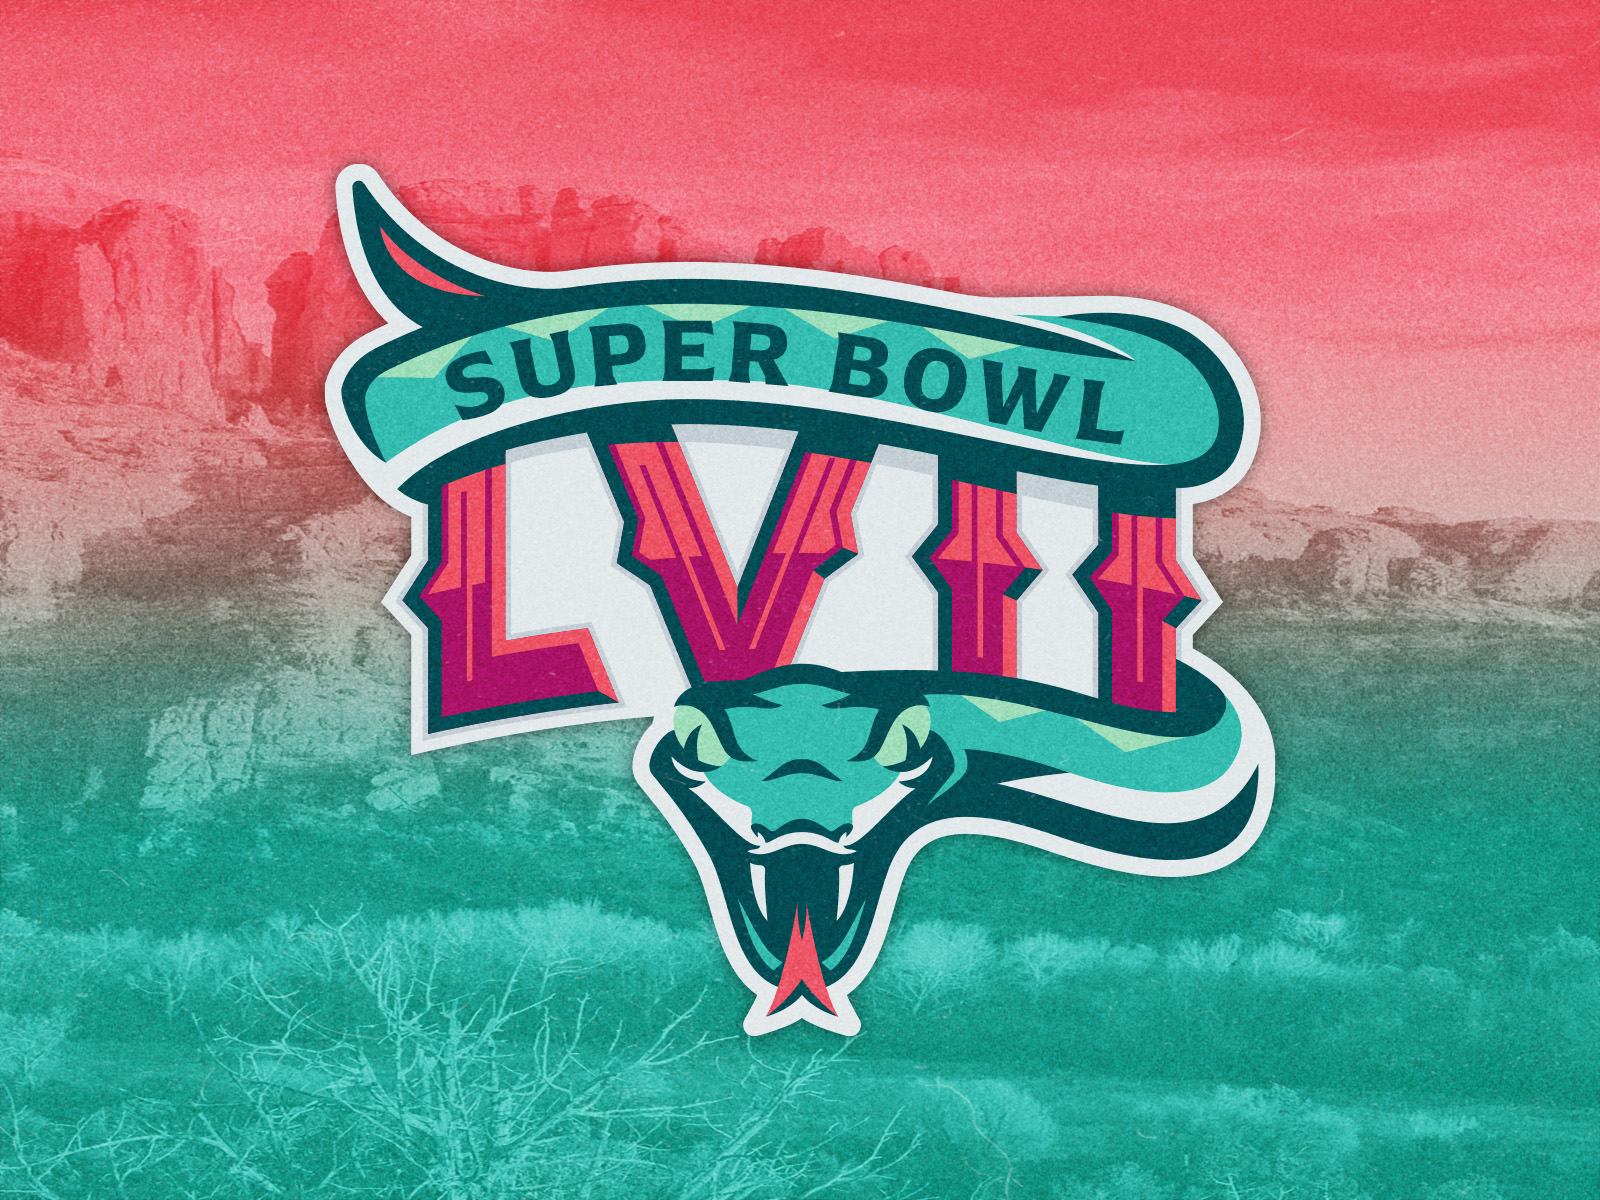 Super Bowl LIV Concept by Dan Blessing